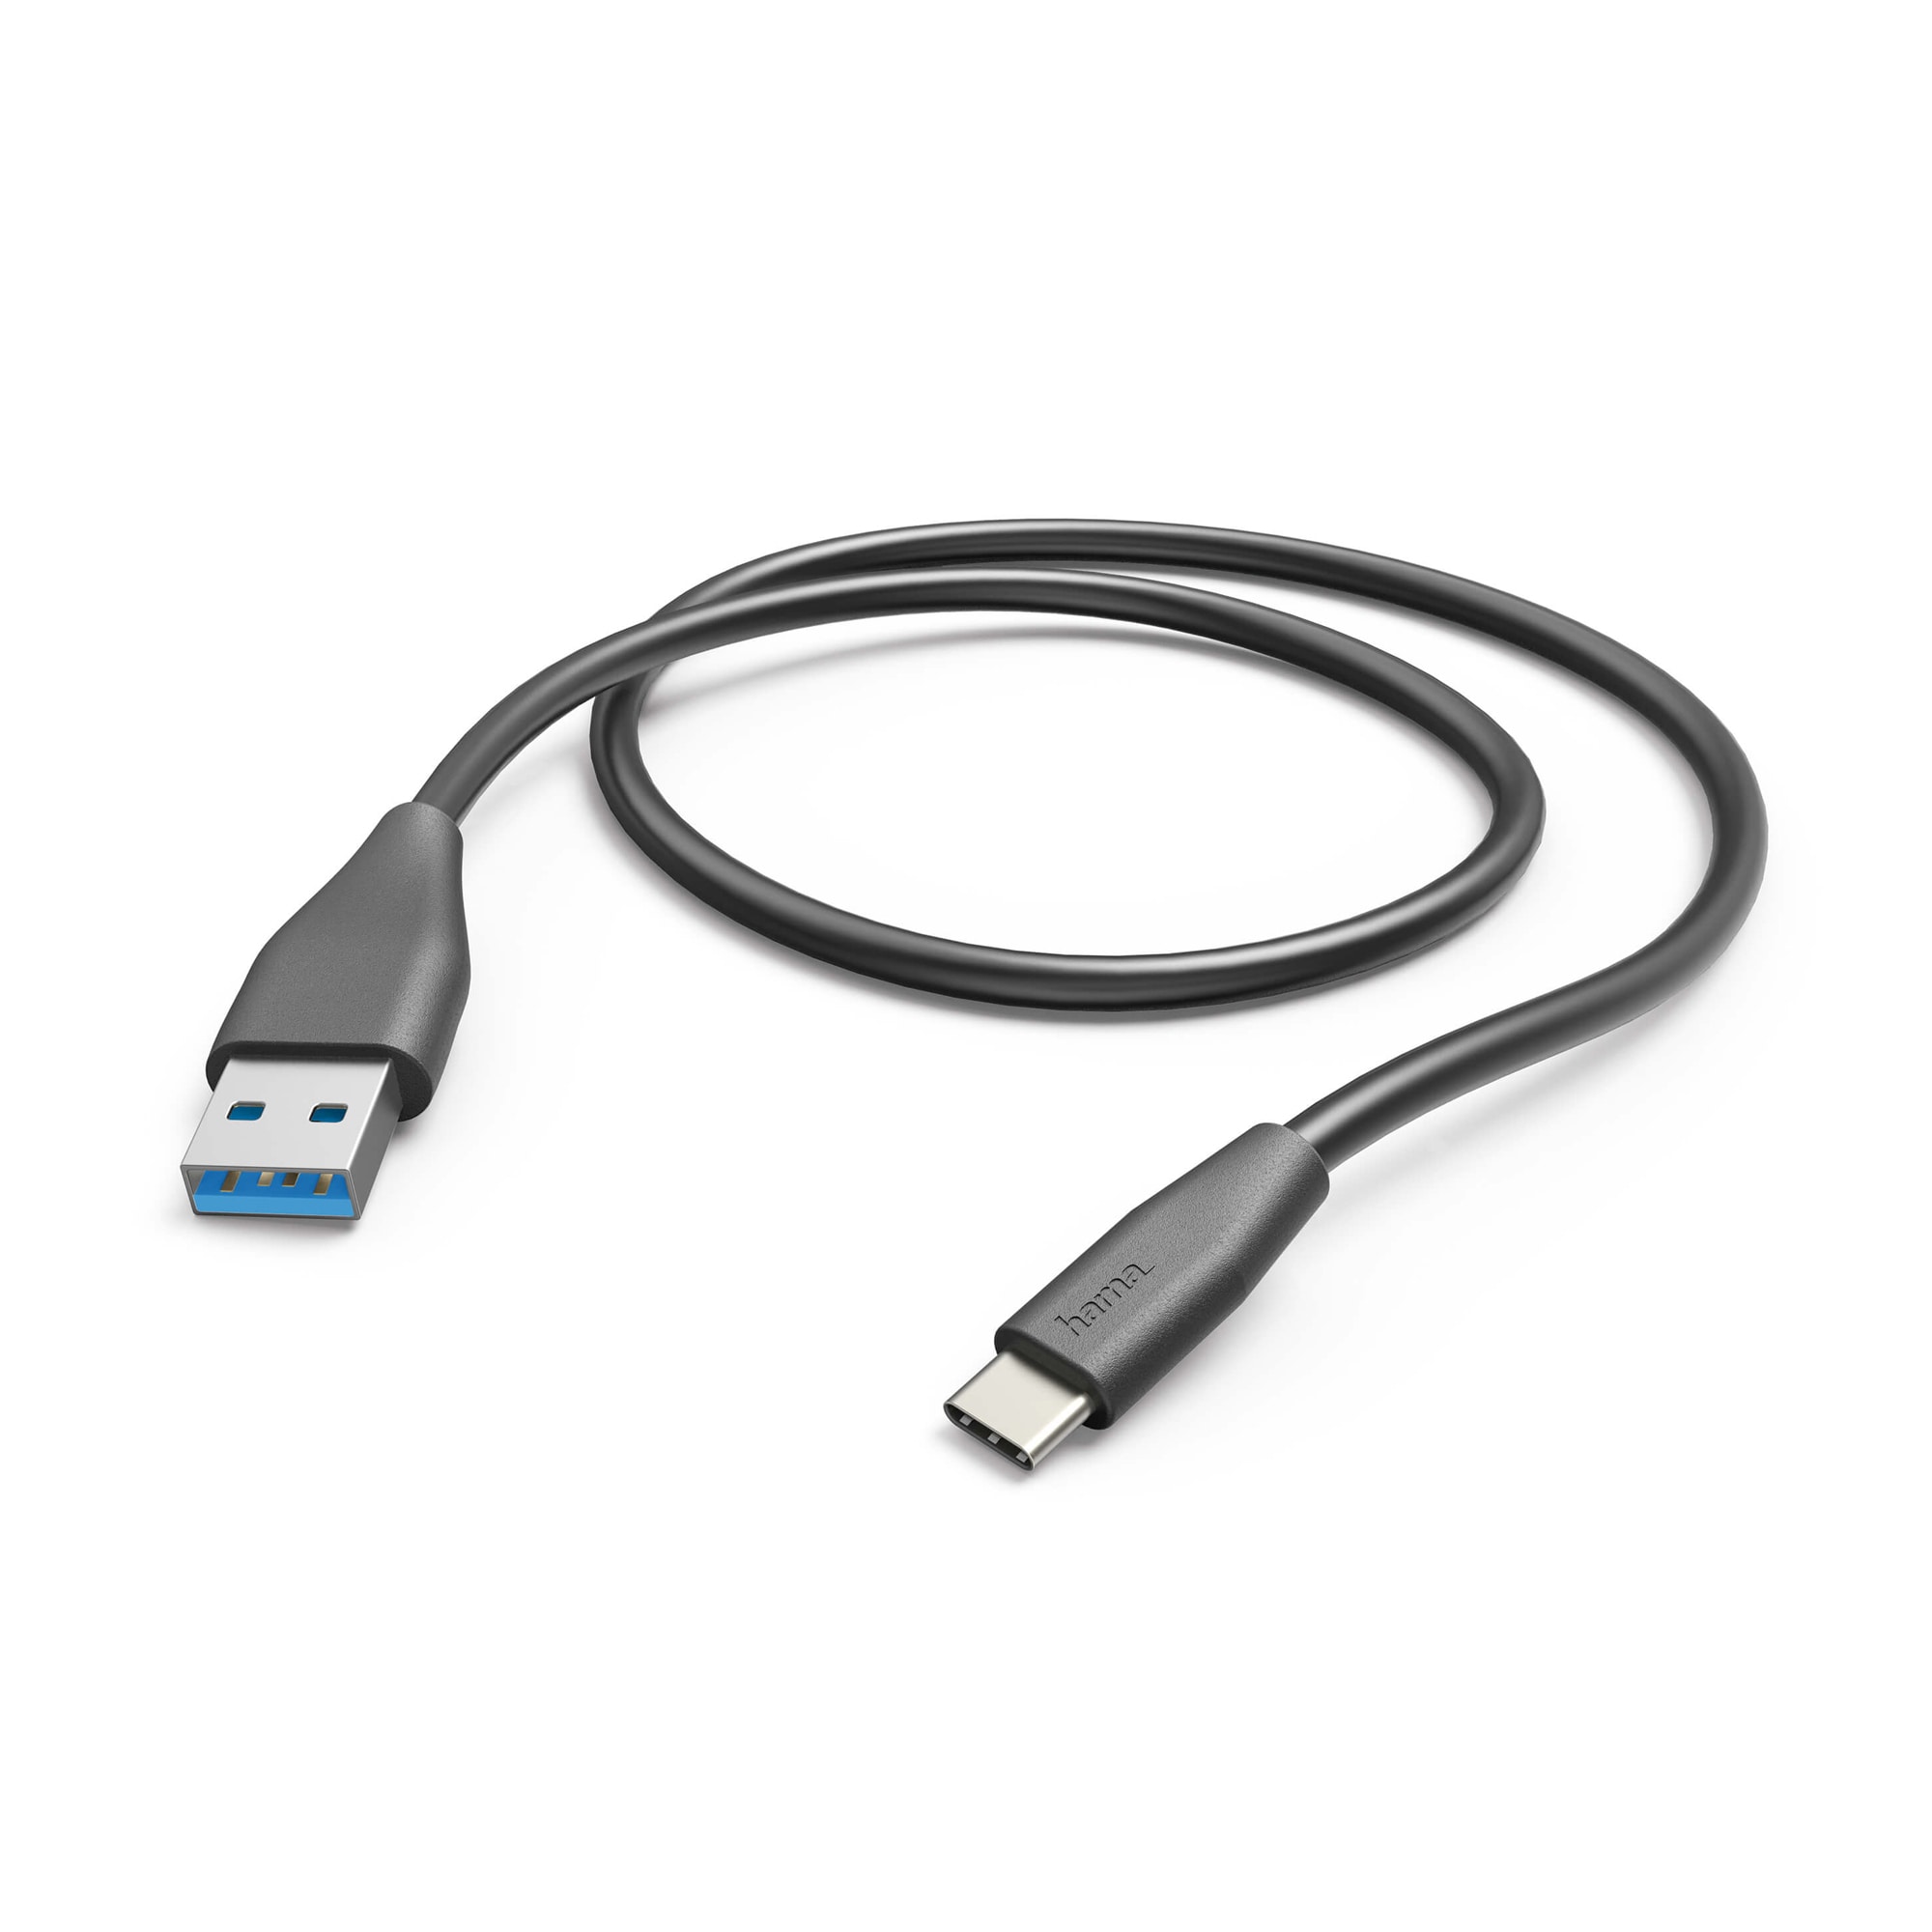 Hama Synkkabel USB-C 3.1 1M Svart